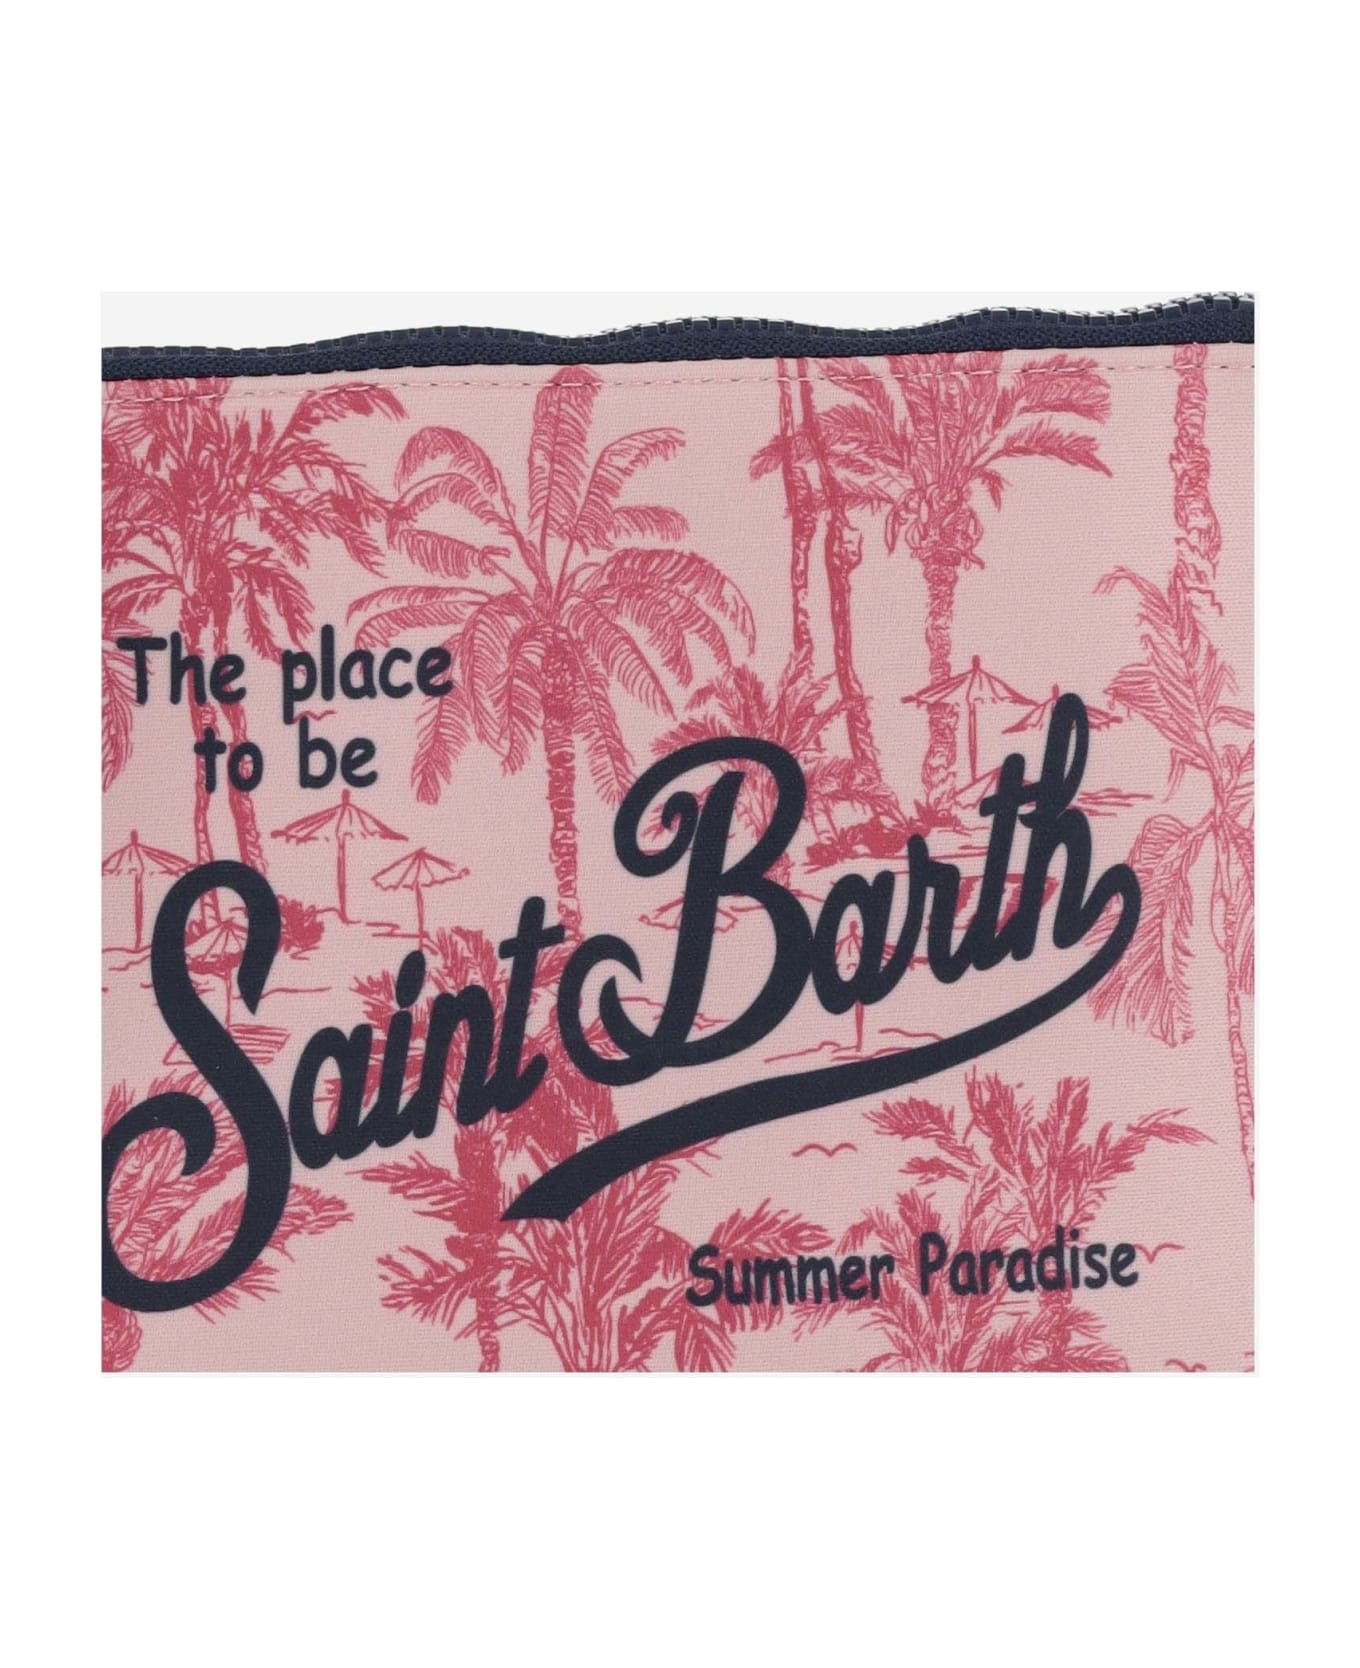 MC2 Saint Barth Scuba Clutch Bag With Graphic Print - Pink